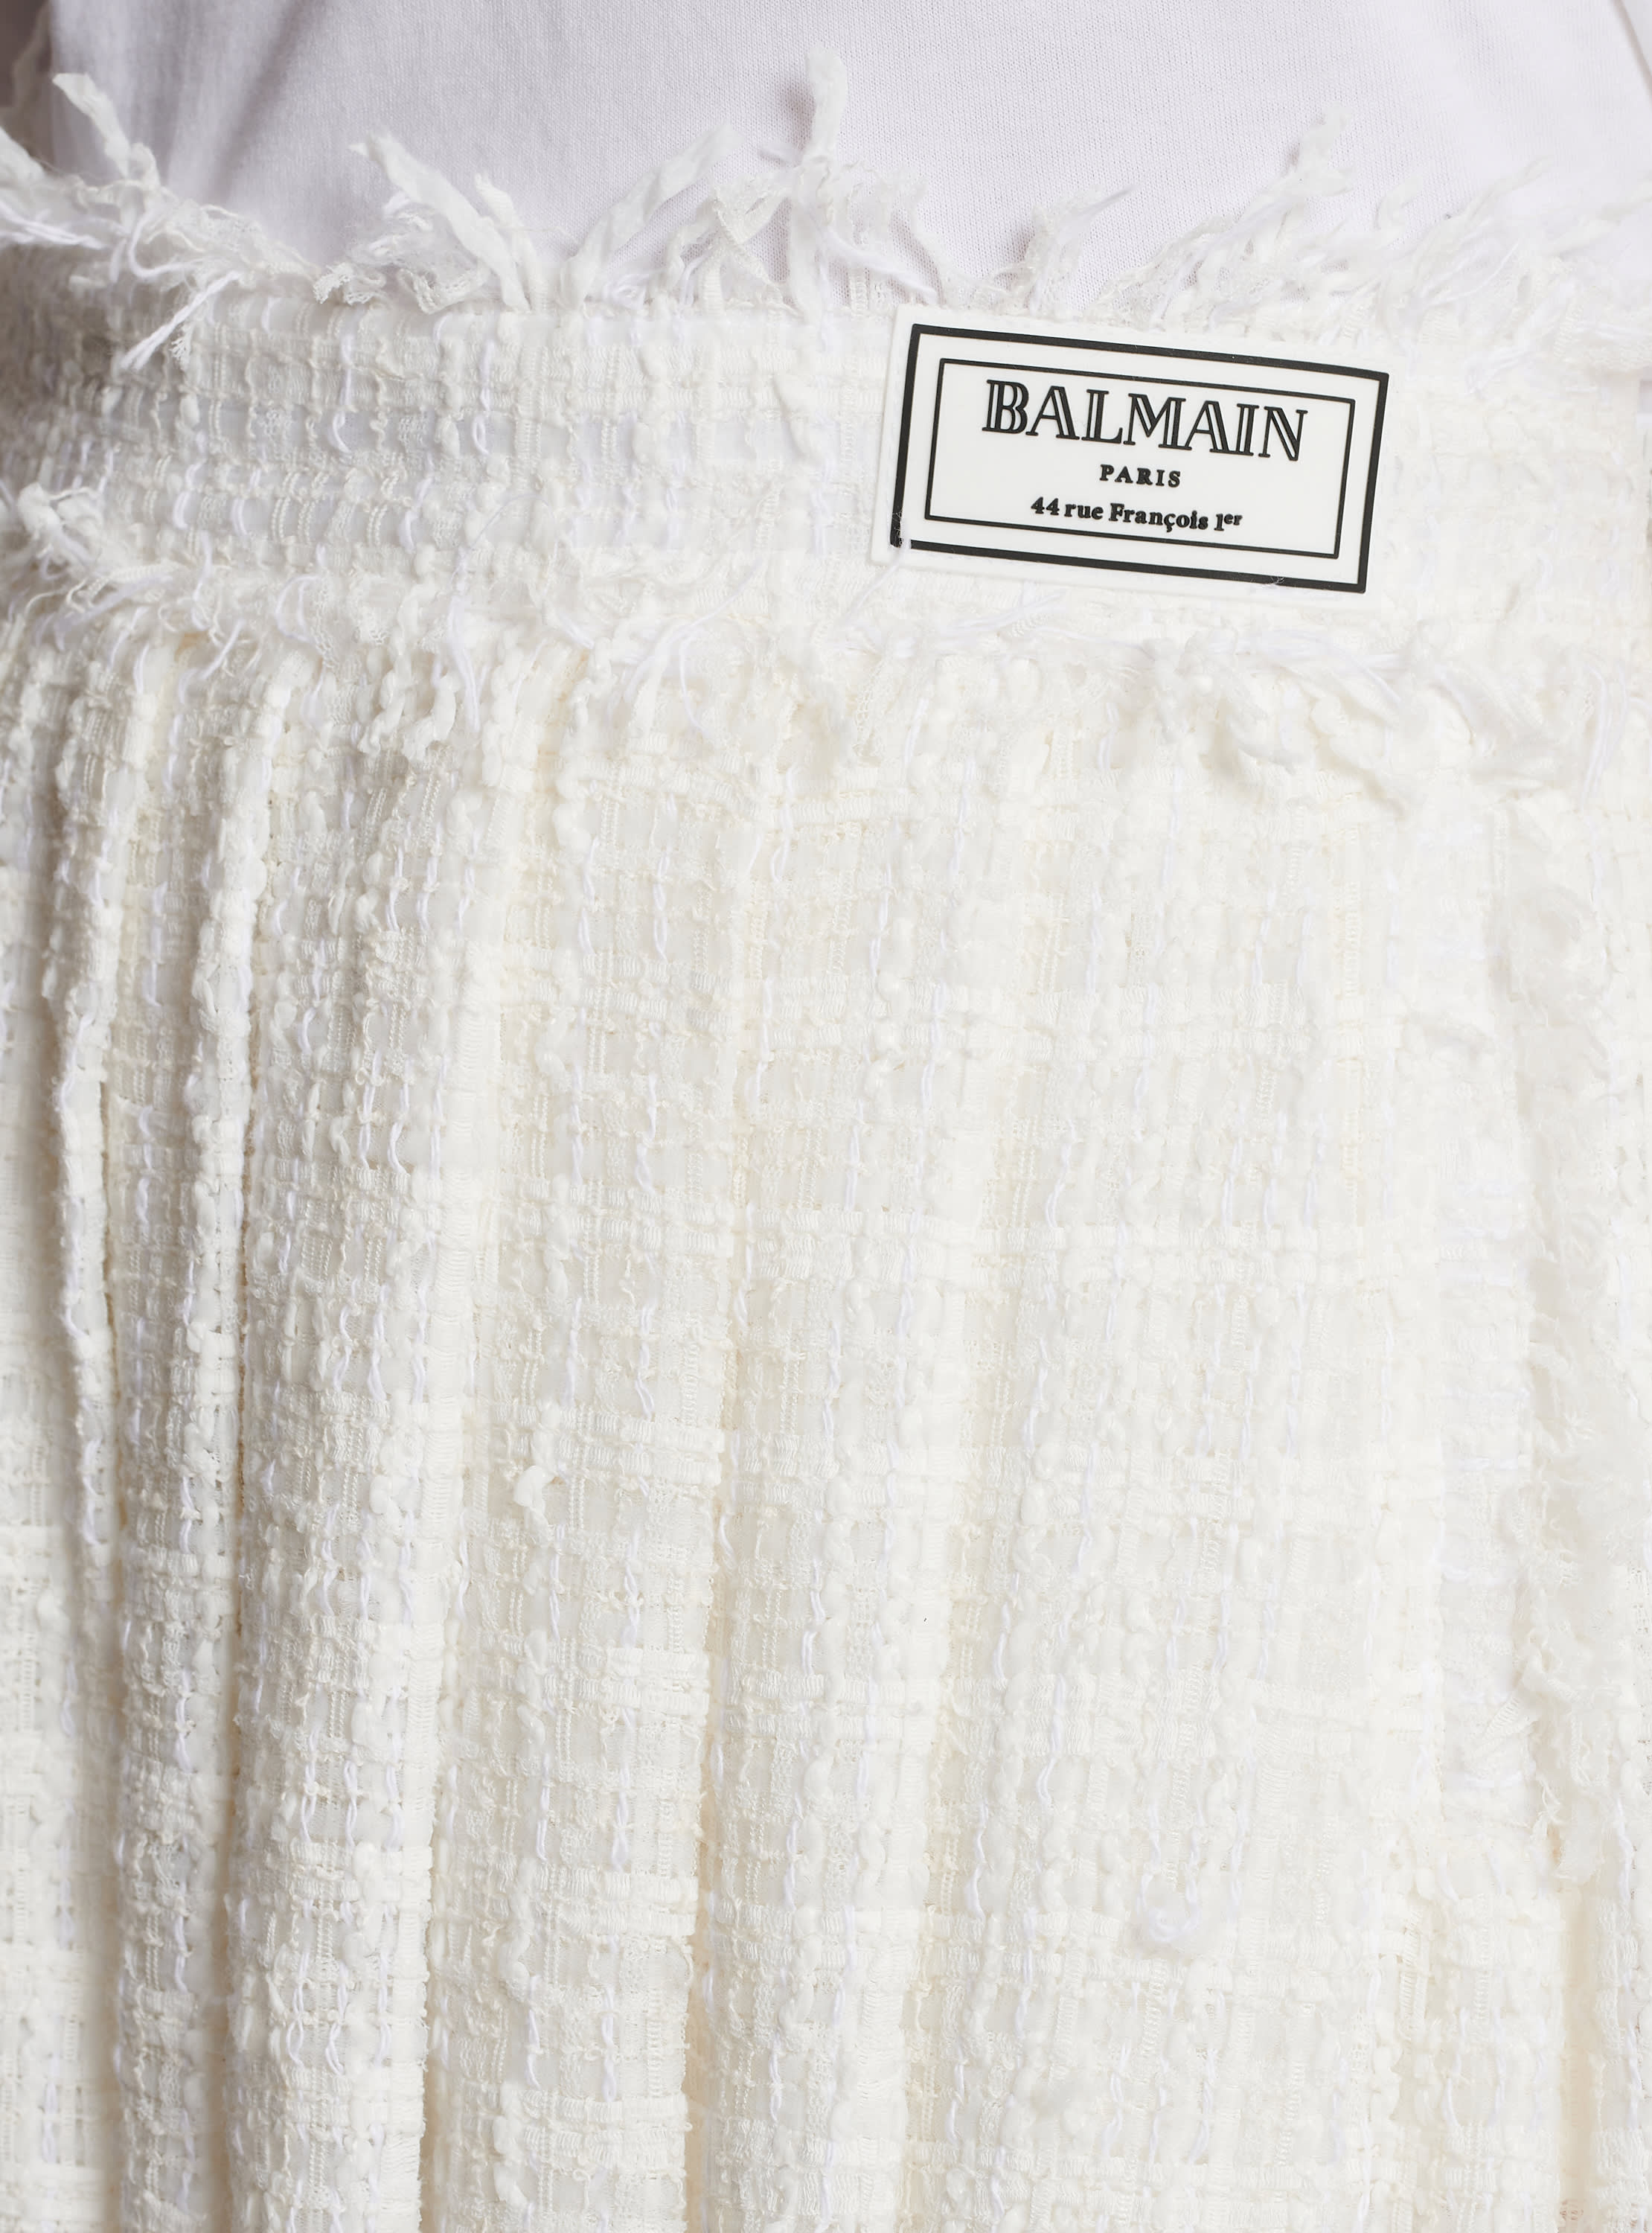 Balmain sequin-embellished tweed skirt - White